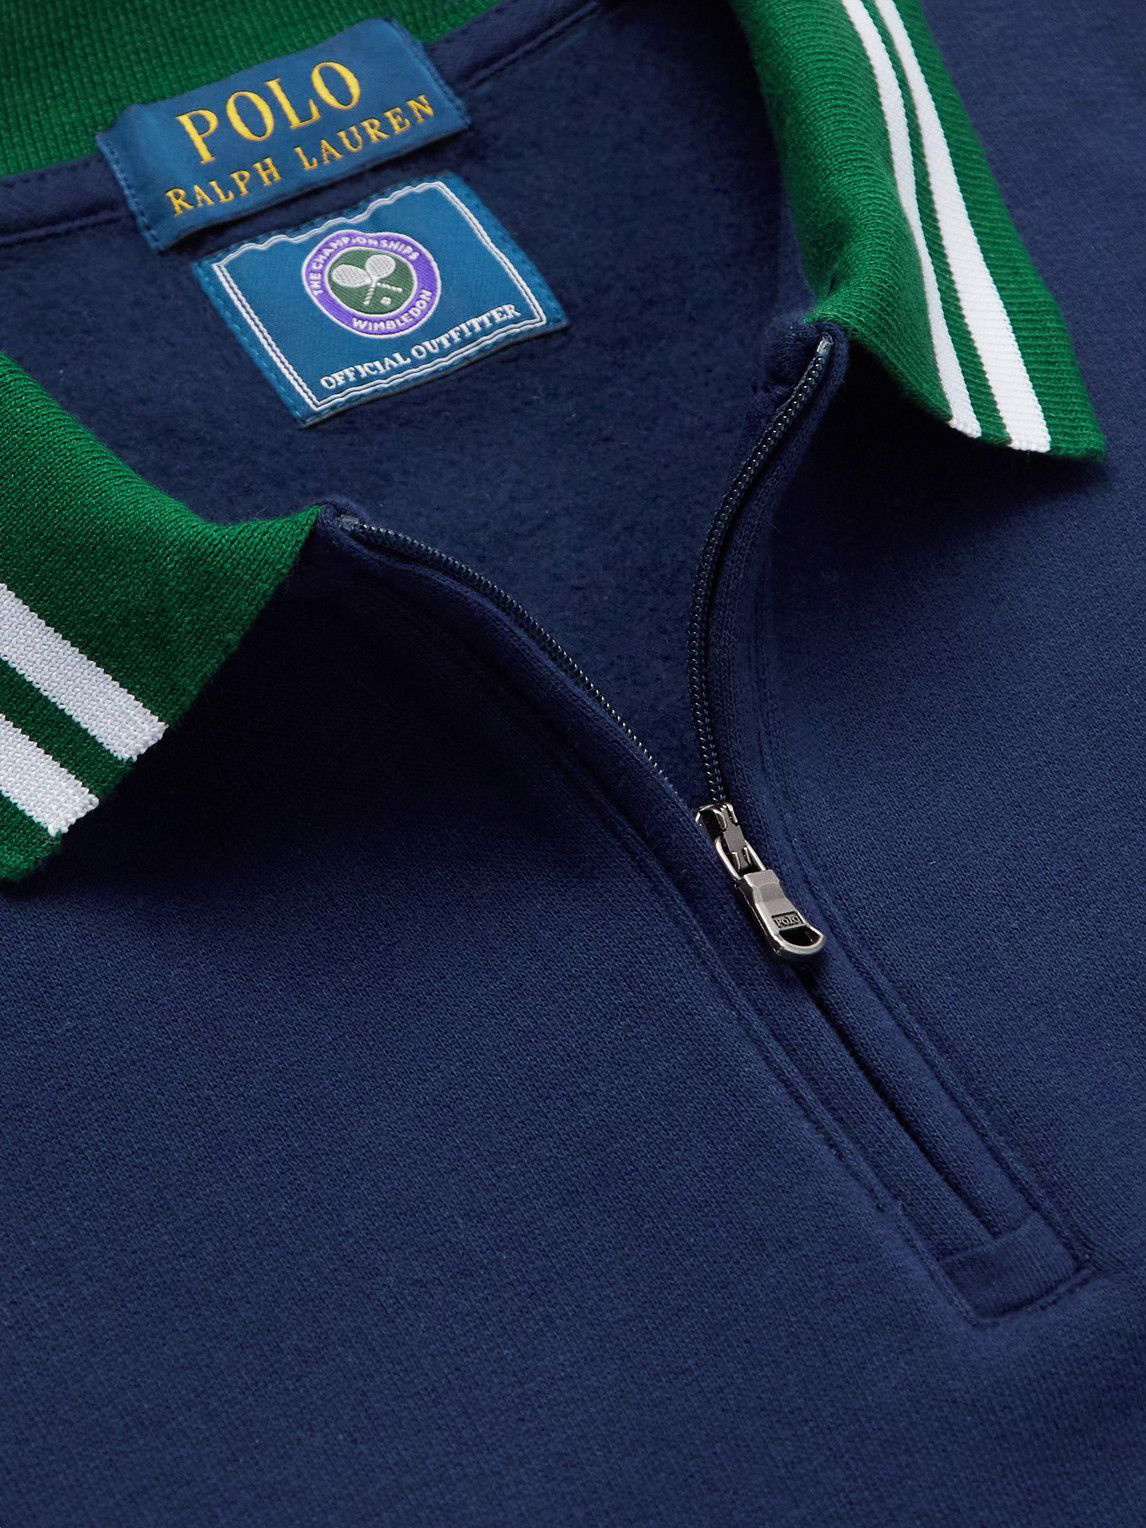 POLO RALPH LAUREN Sweat Jacket Wimbledon Collection for boys